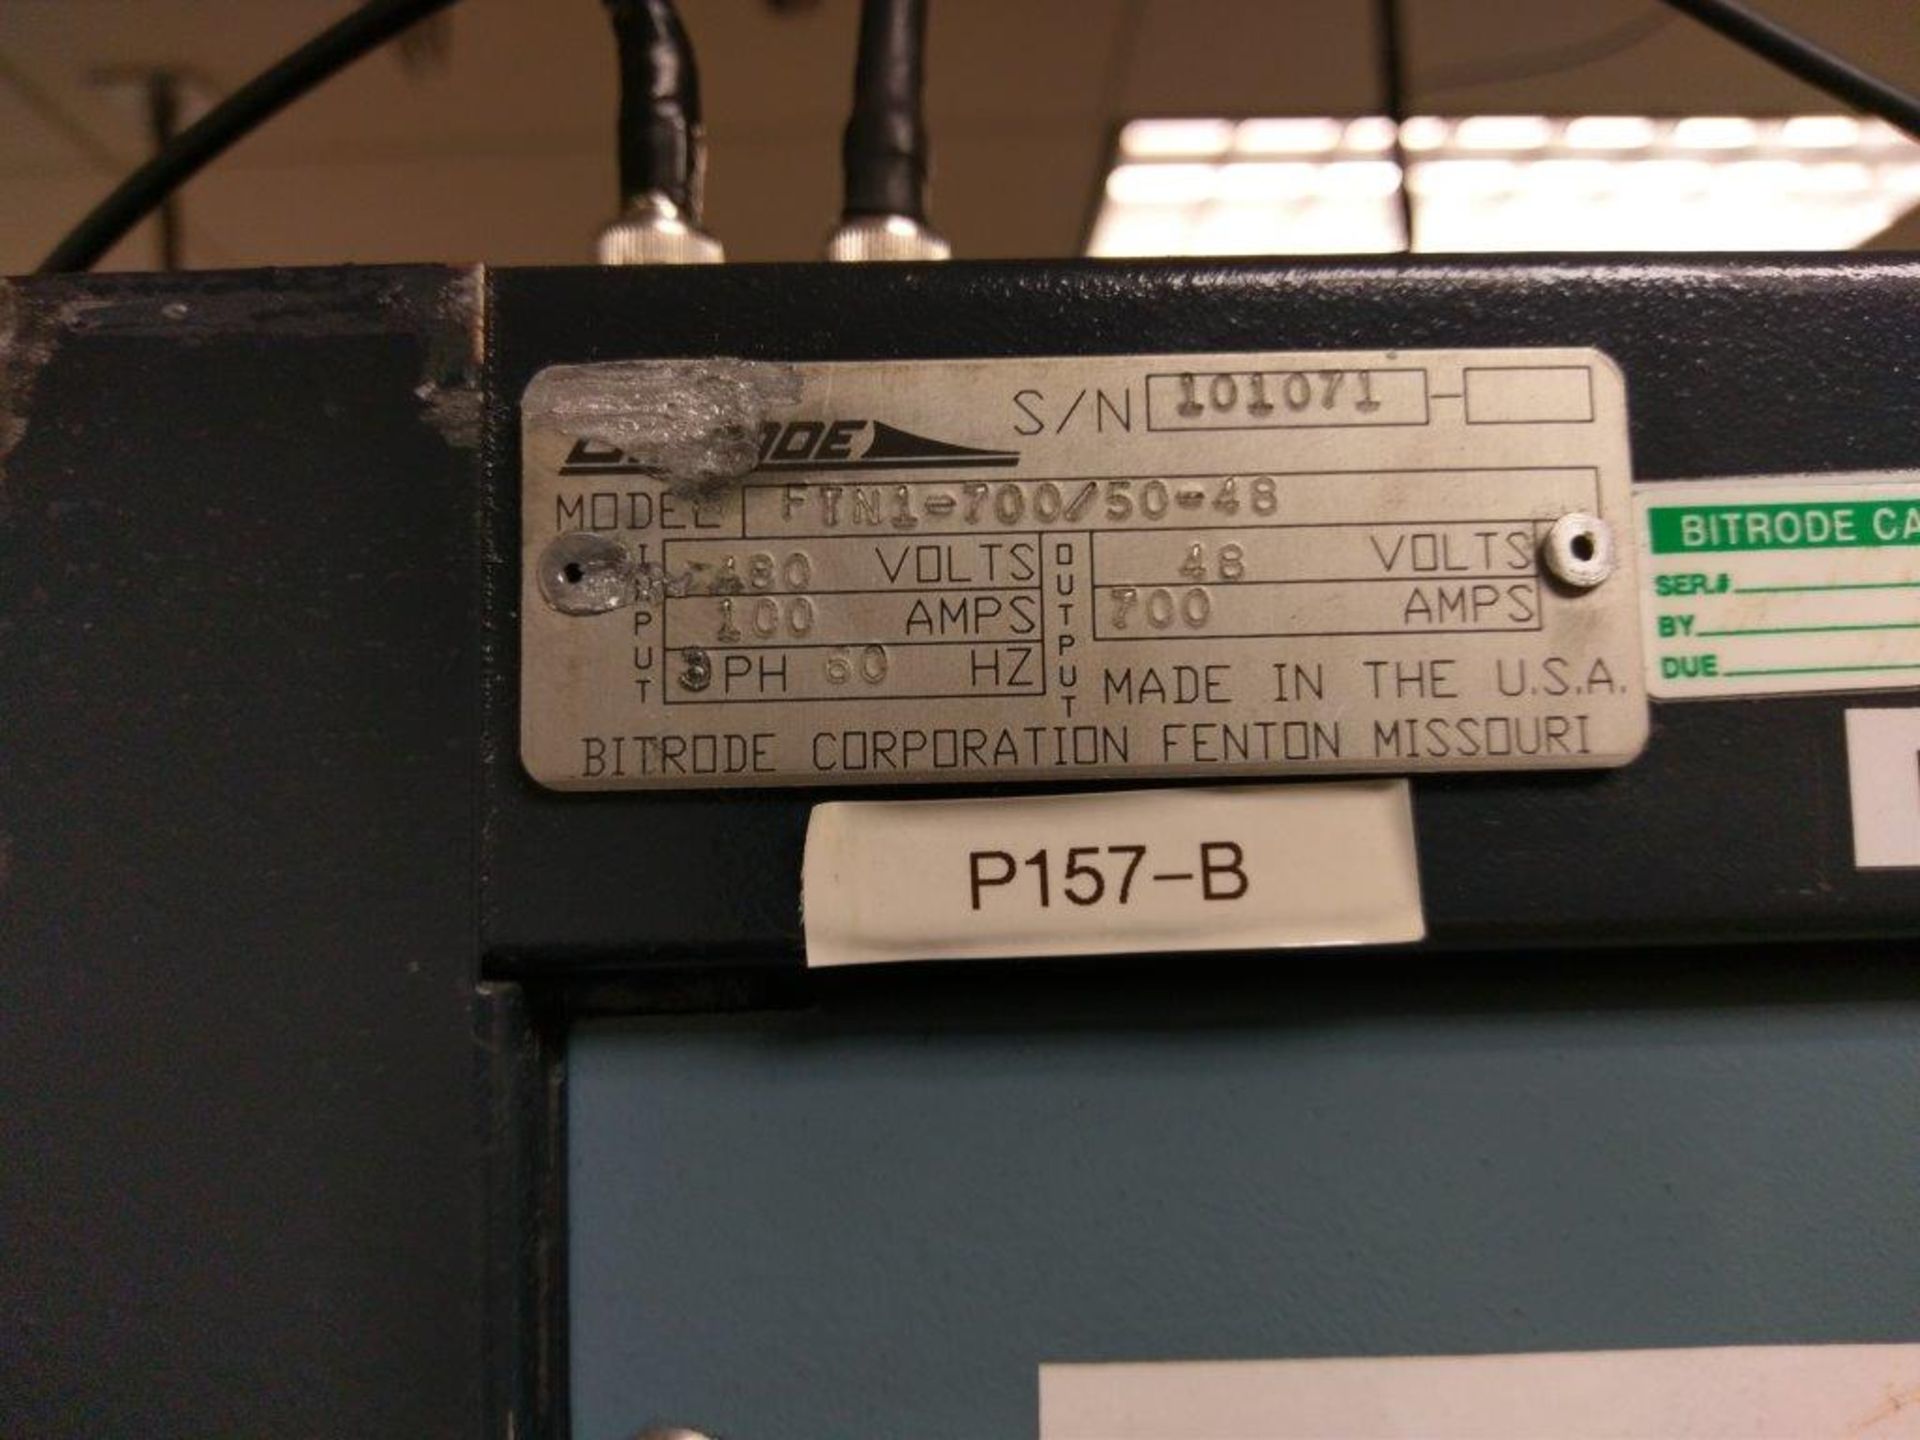 Bitrode Battery Cycler / Tester Model # FTN1-700/50-48 - Image 2 of 3